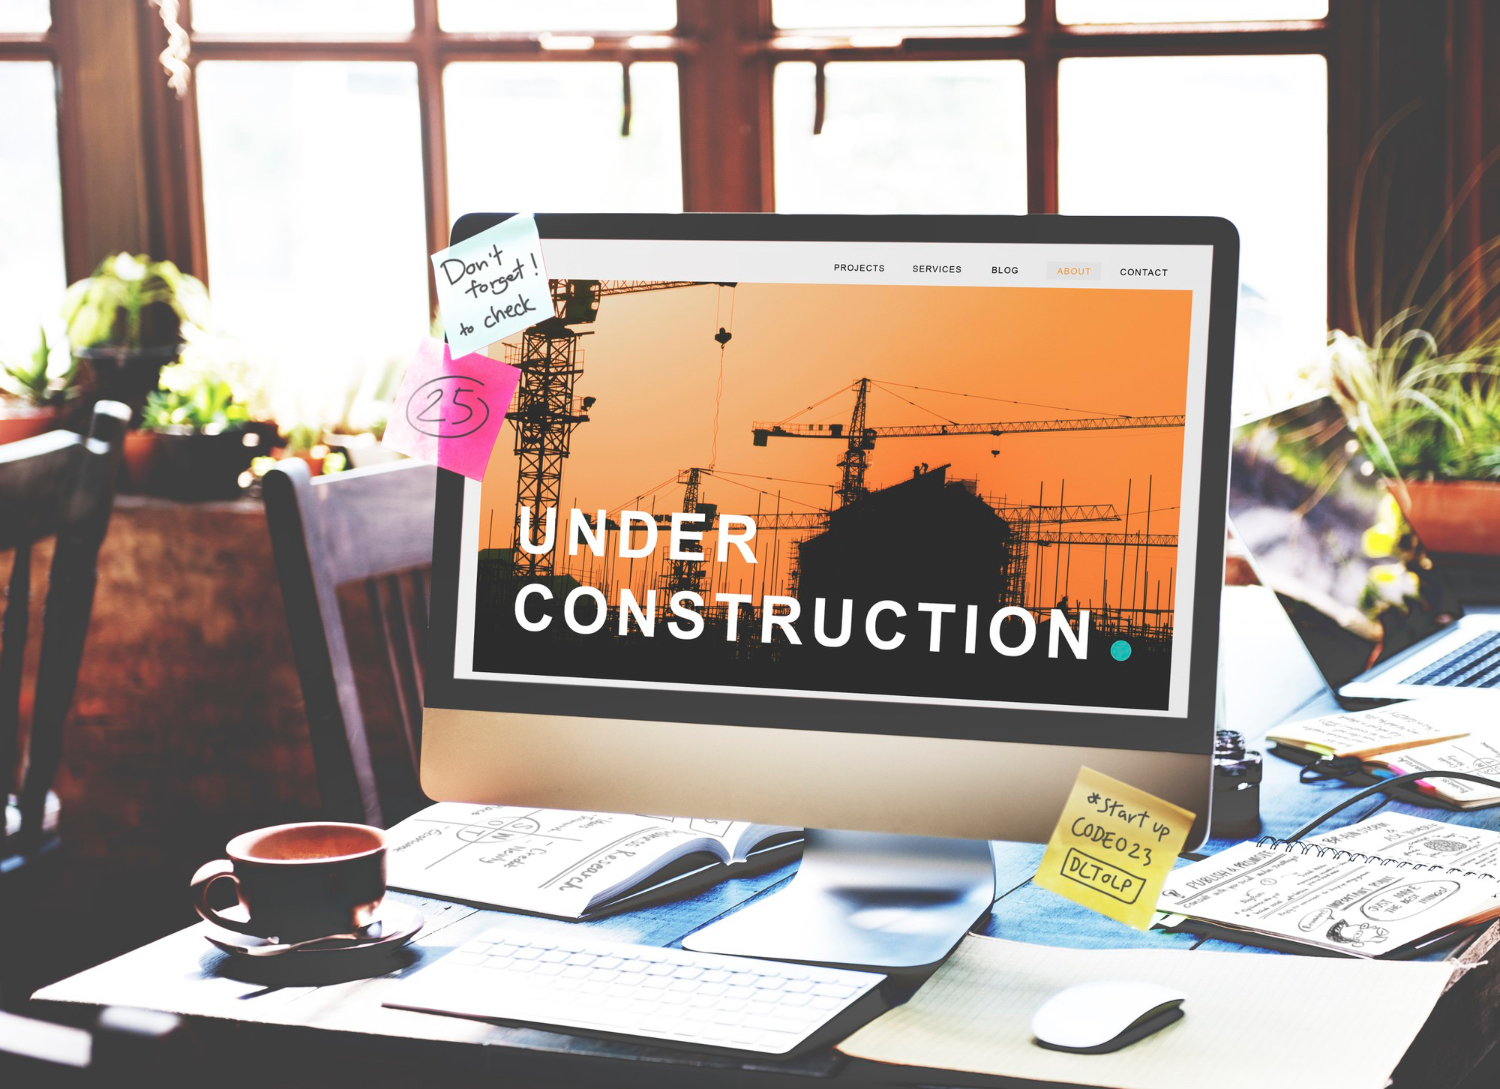 Construction industry - Digital Marketing Services